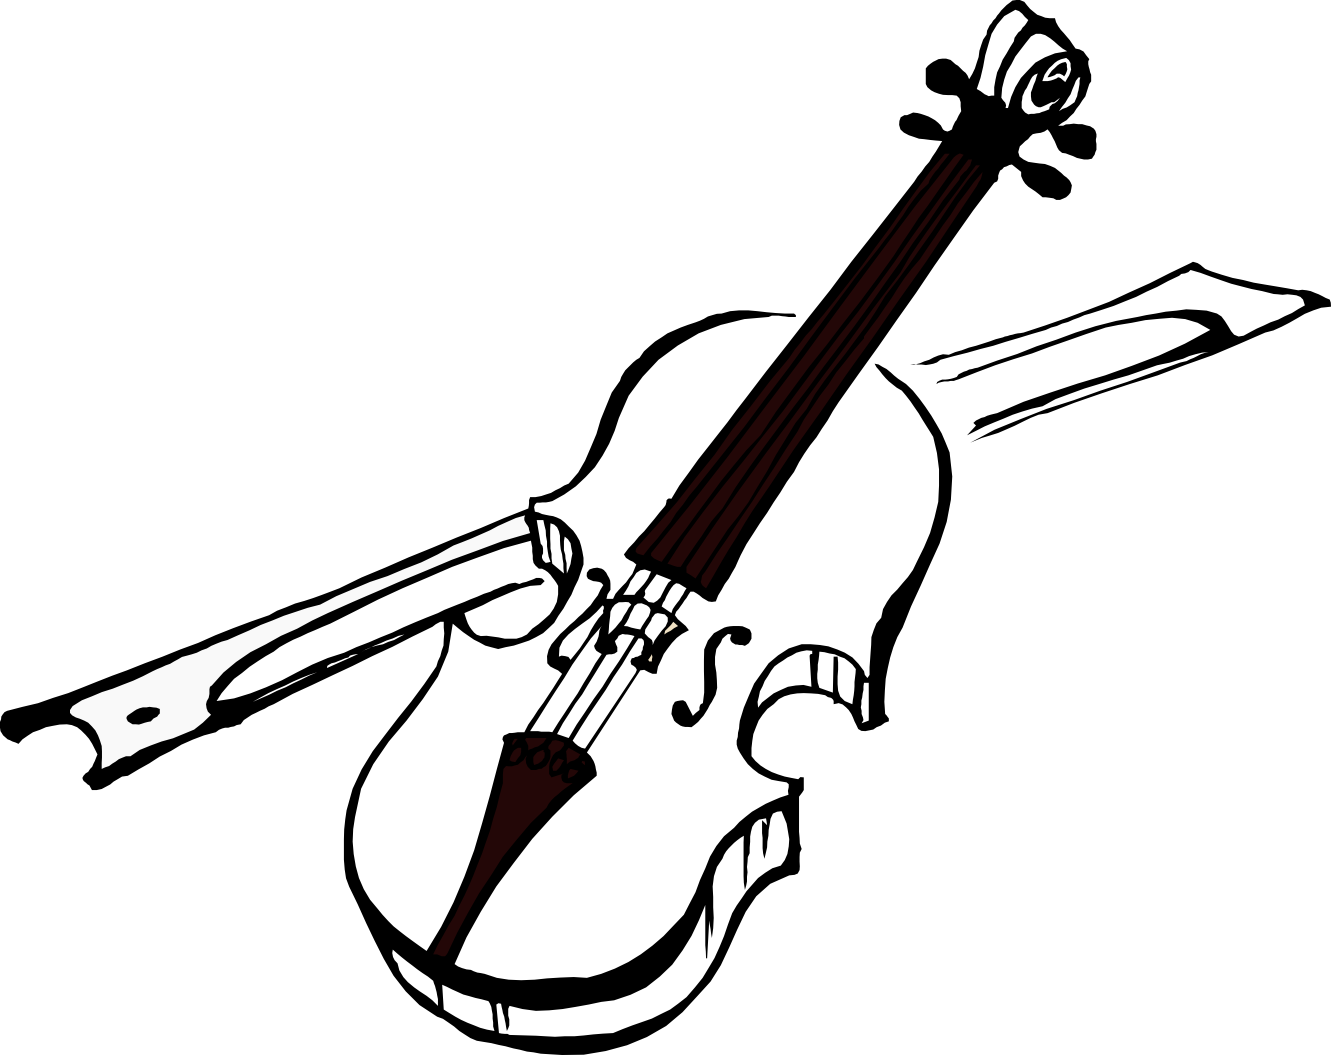 Fiddle Bow Clip Art Illustrat